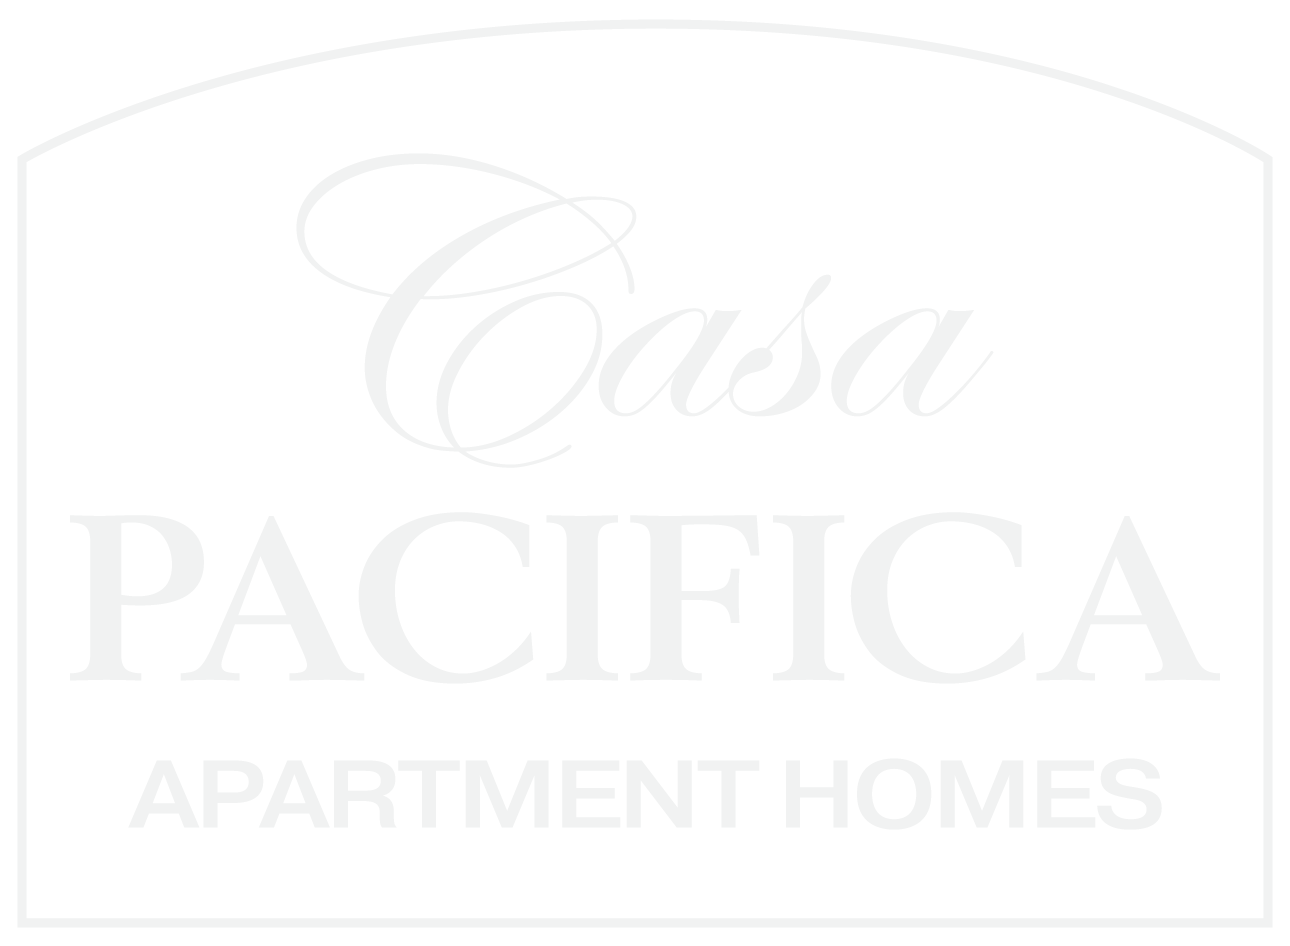 Casa Pacifica Apartment Homes Logo